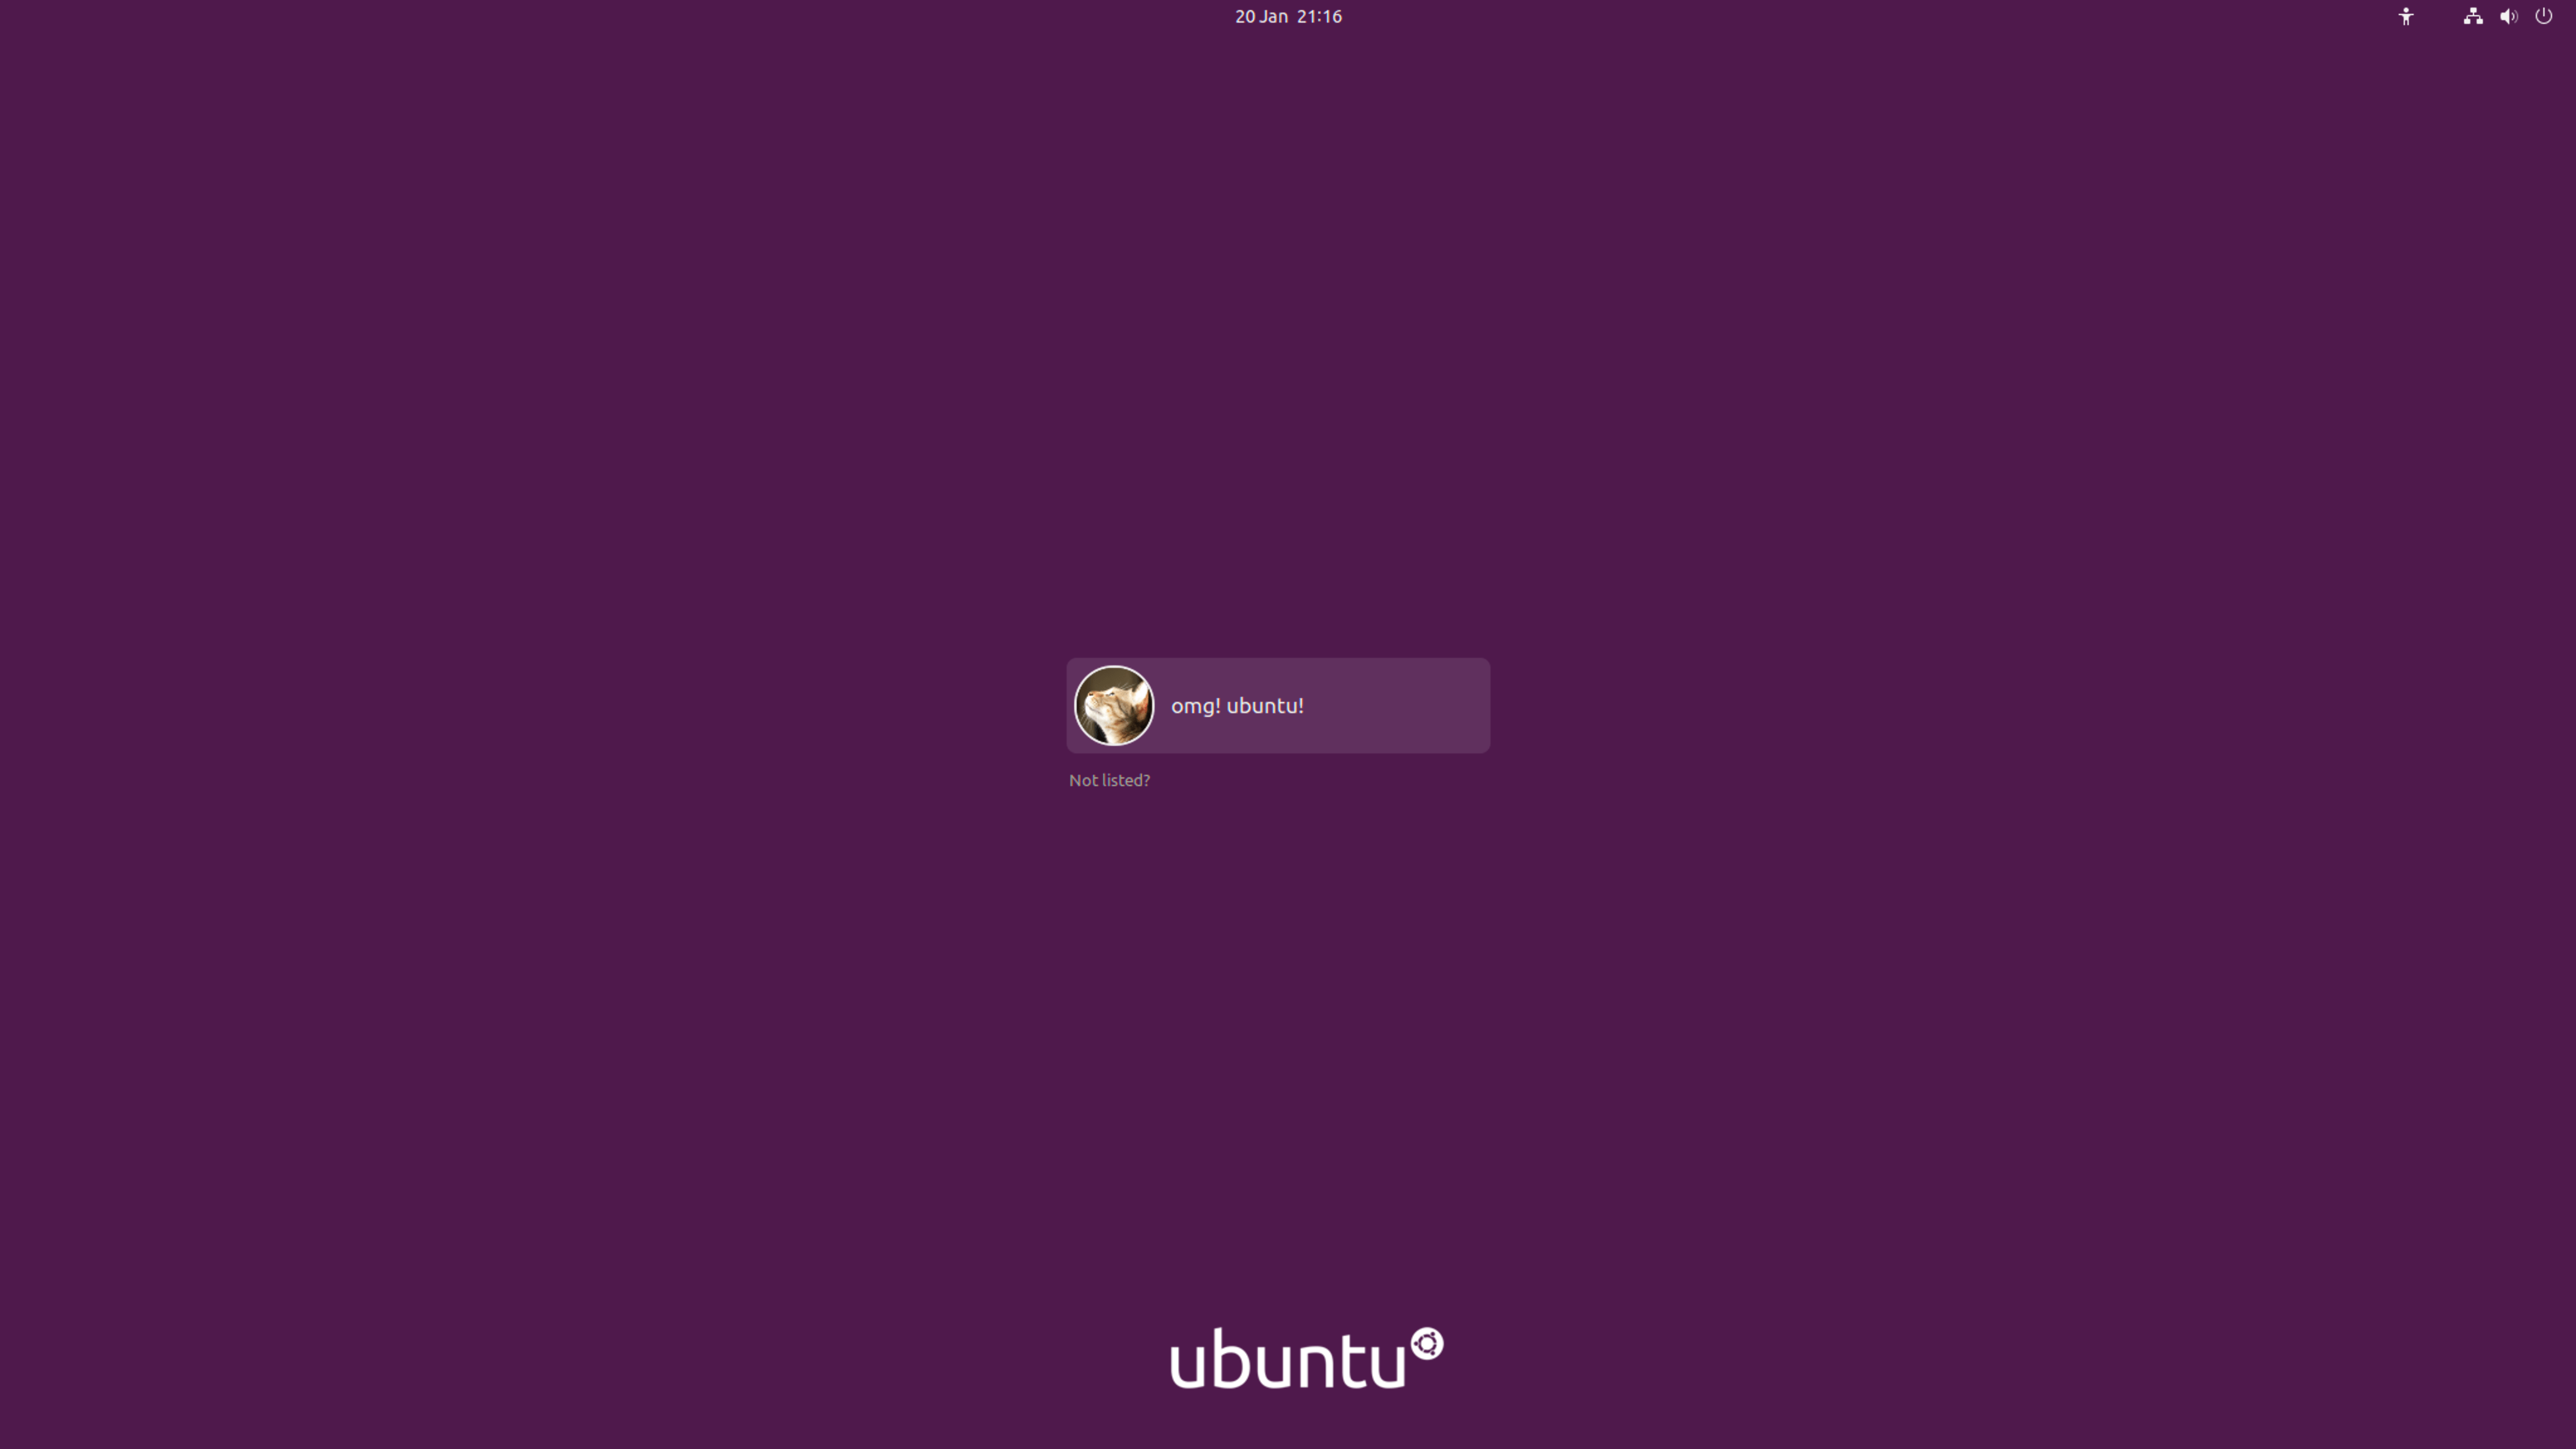 Ubuntu Login Screen